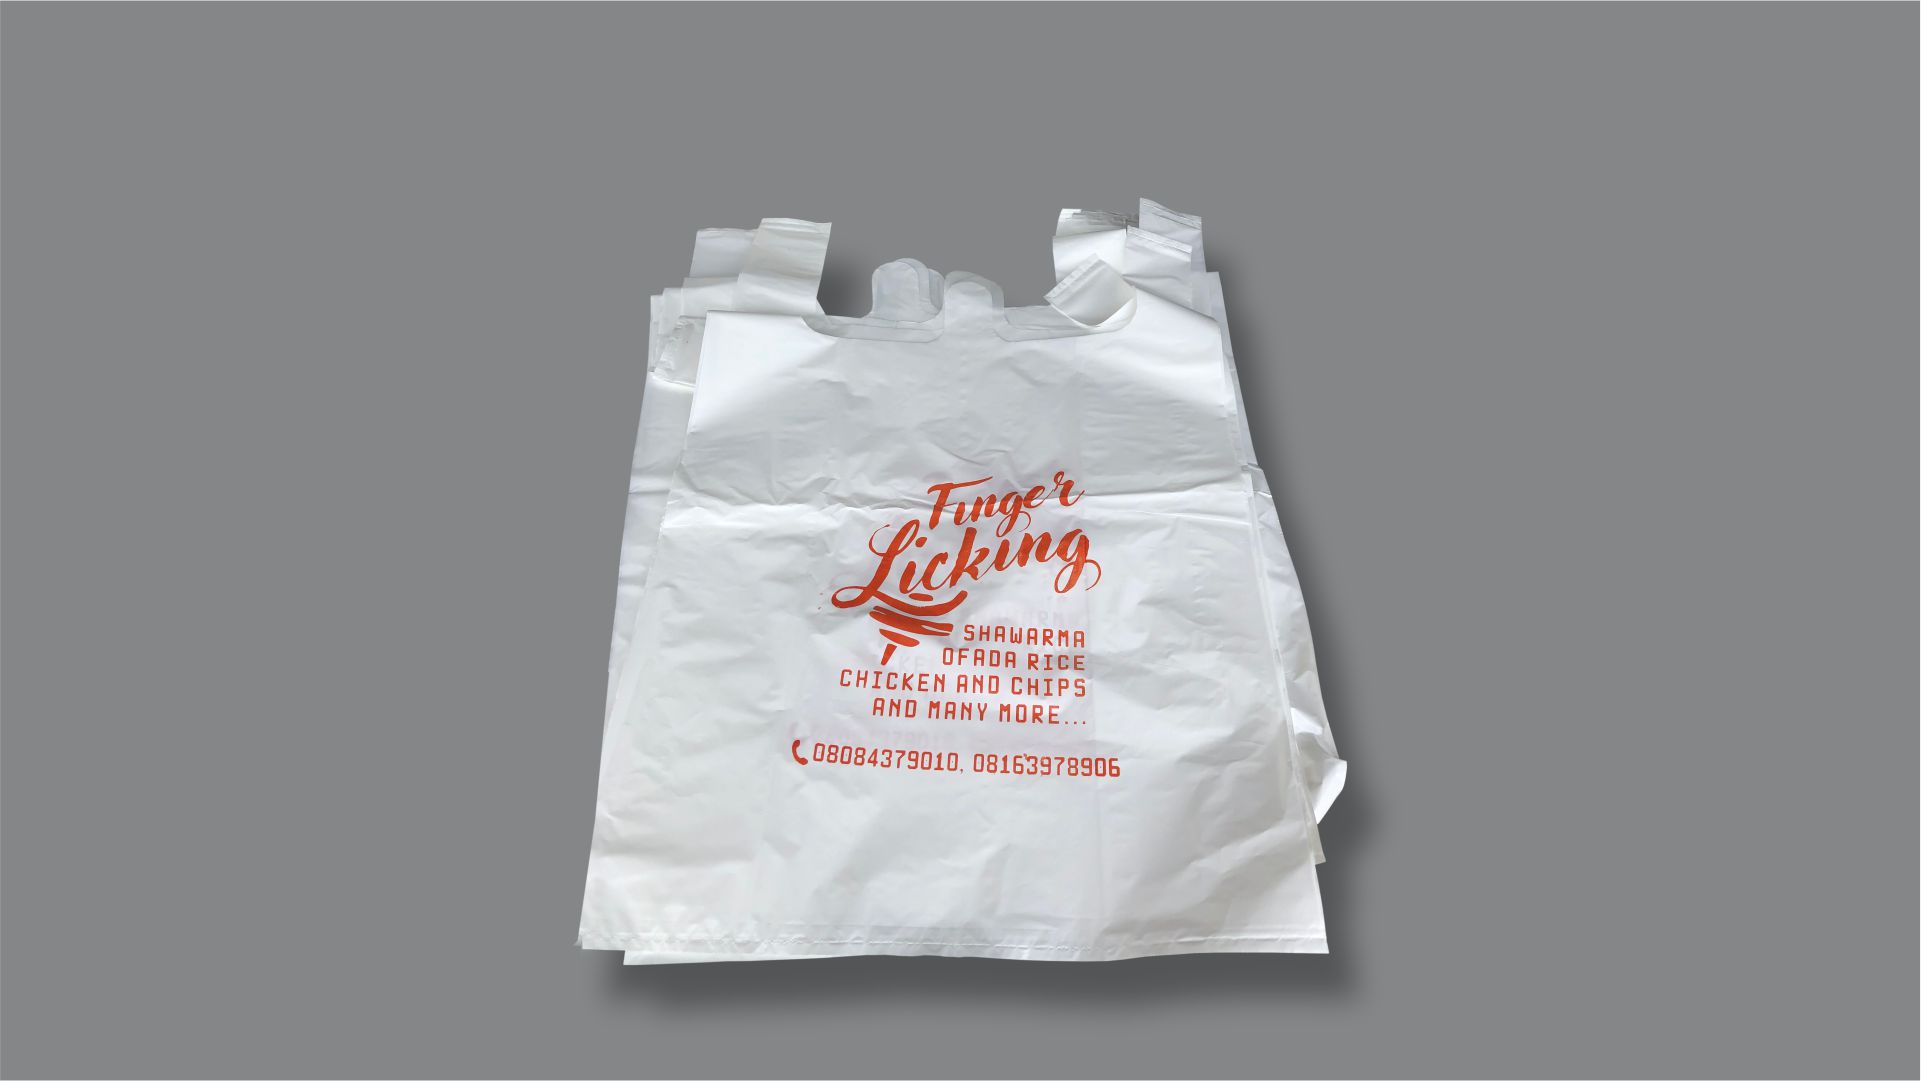 Nylon Bags Printing and Design in Lagos Nigeria